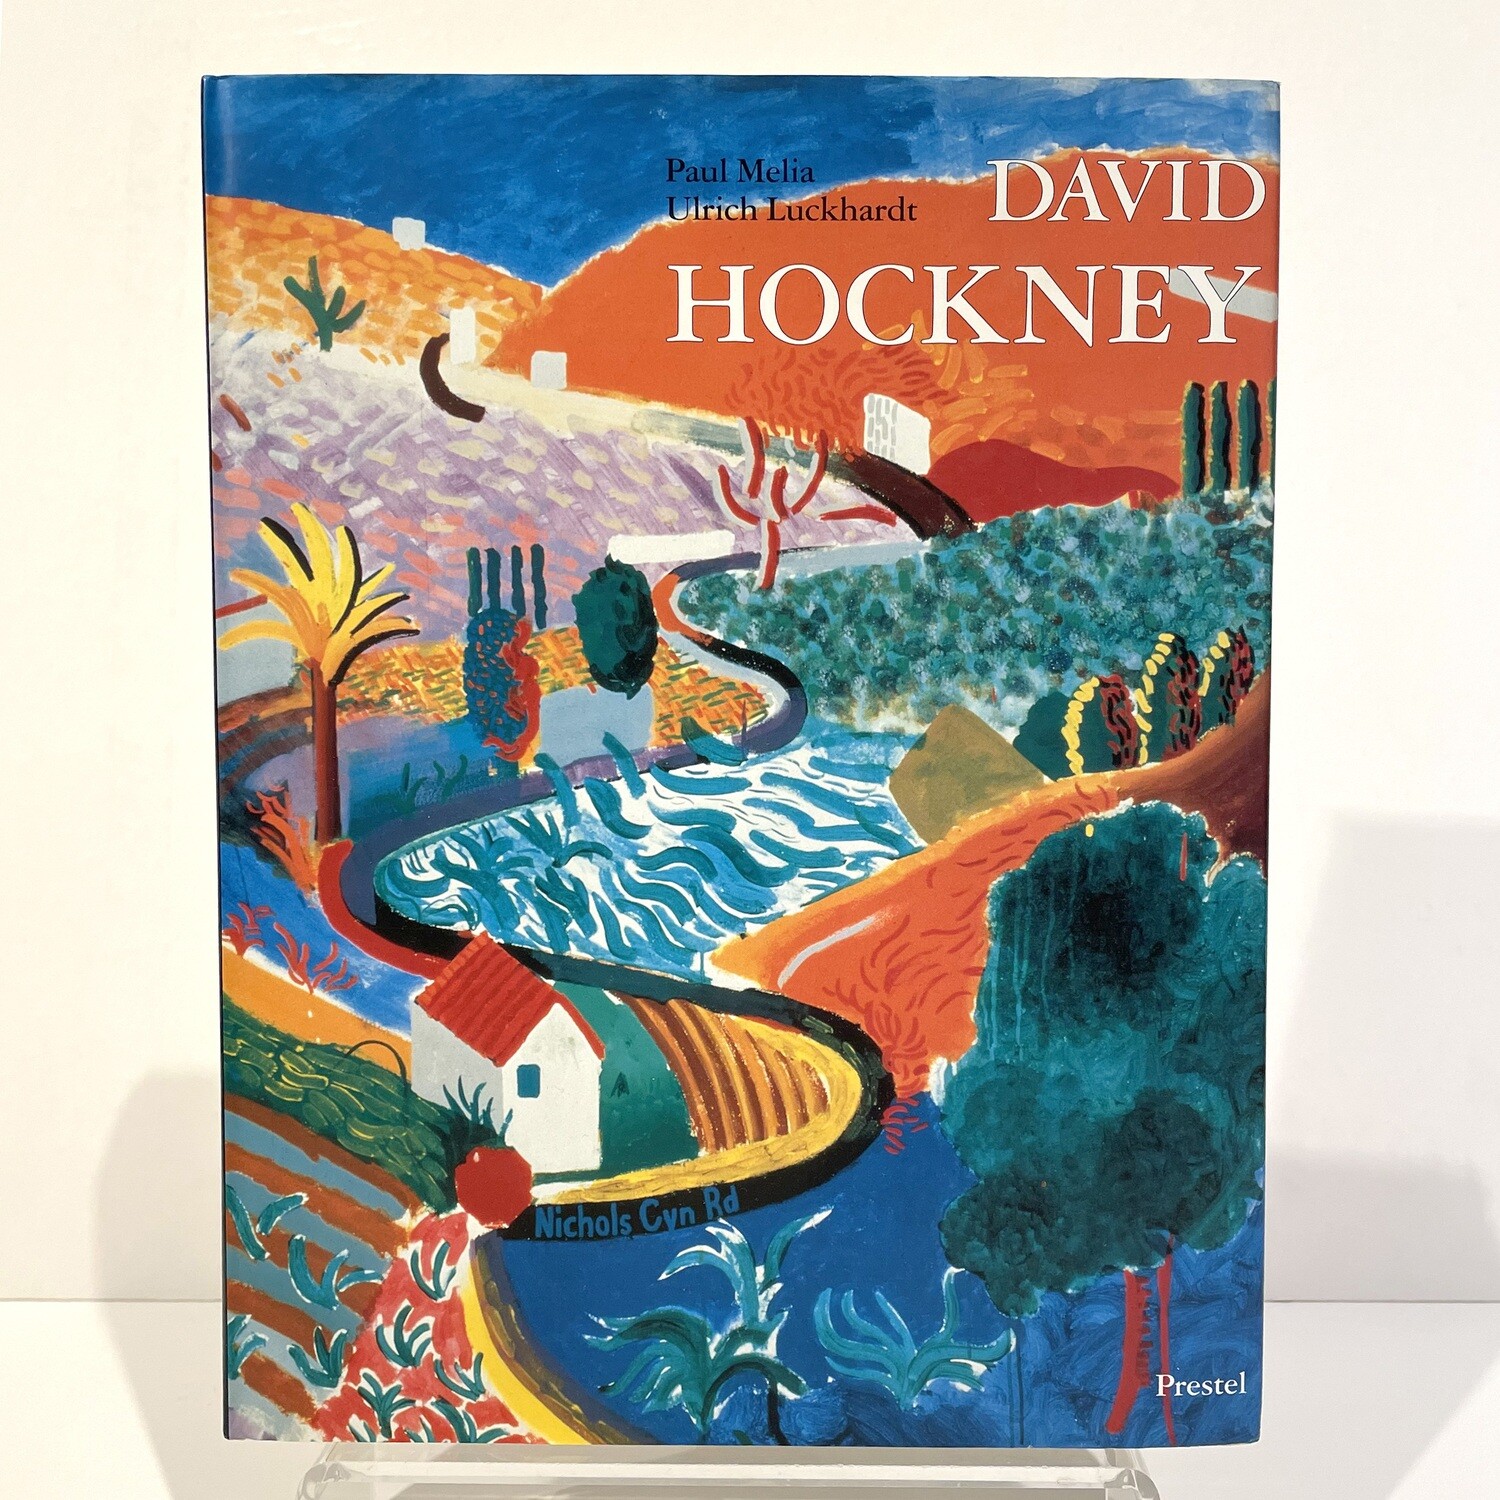 David Hockney, Paul Malia & Ulrich Luckhardt, 2000